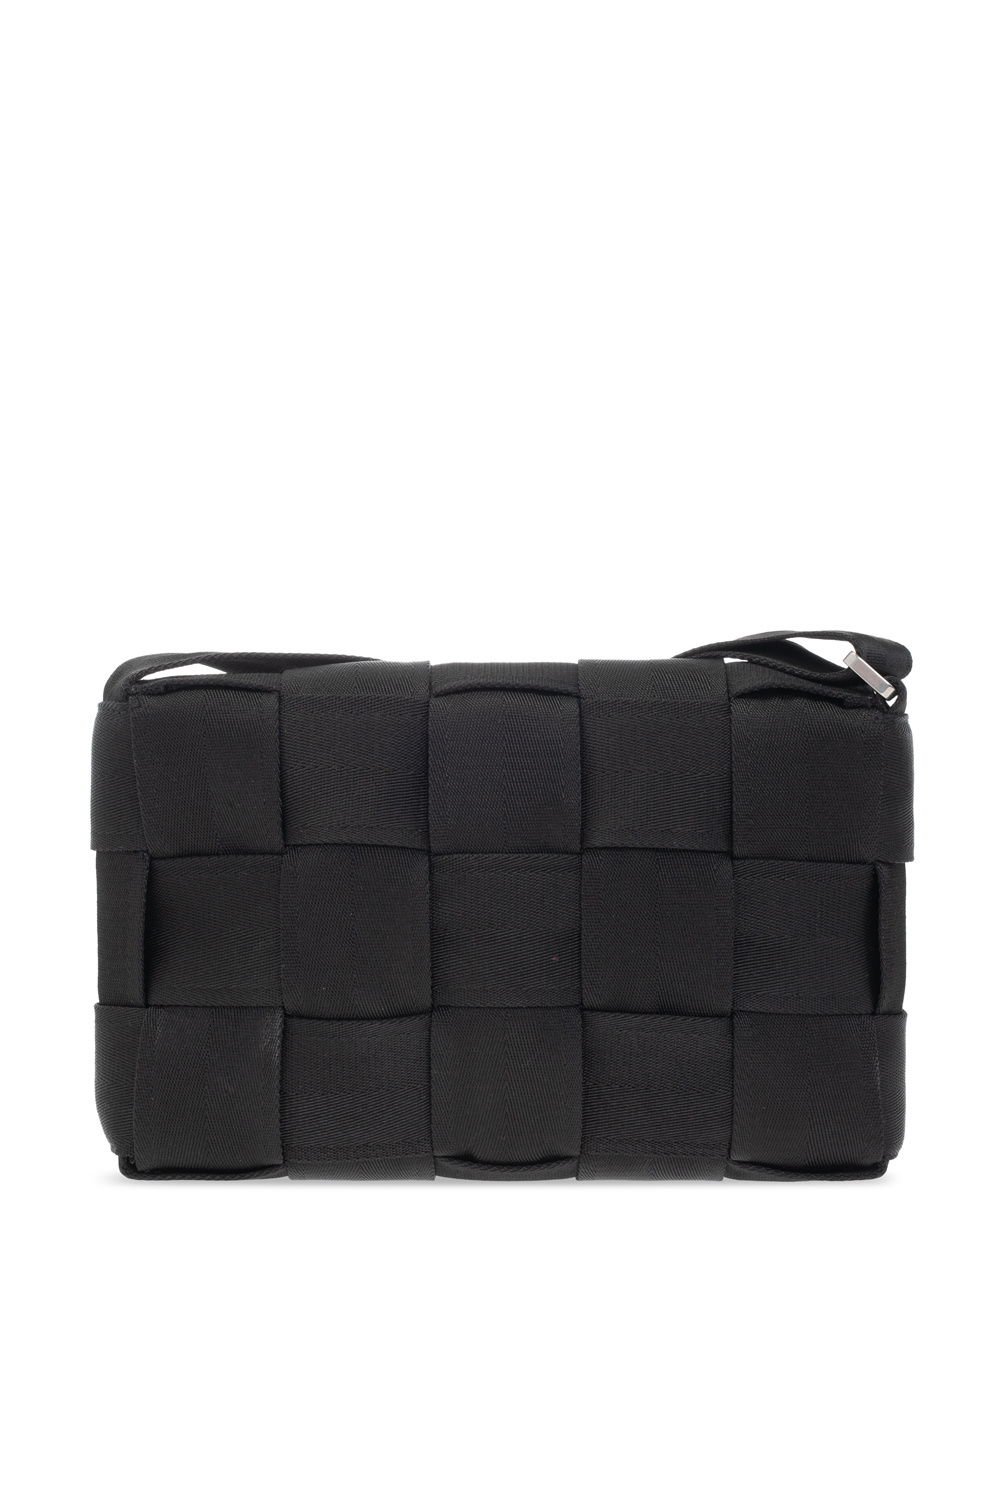 Bottega Veneta ‘Webbing’ shoulder bag